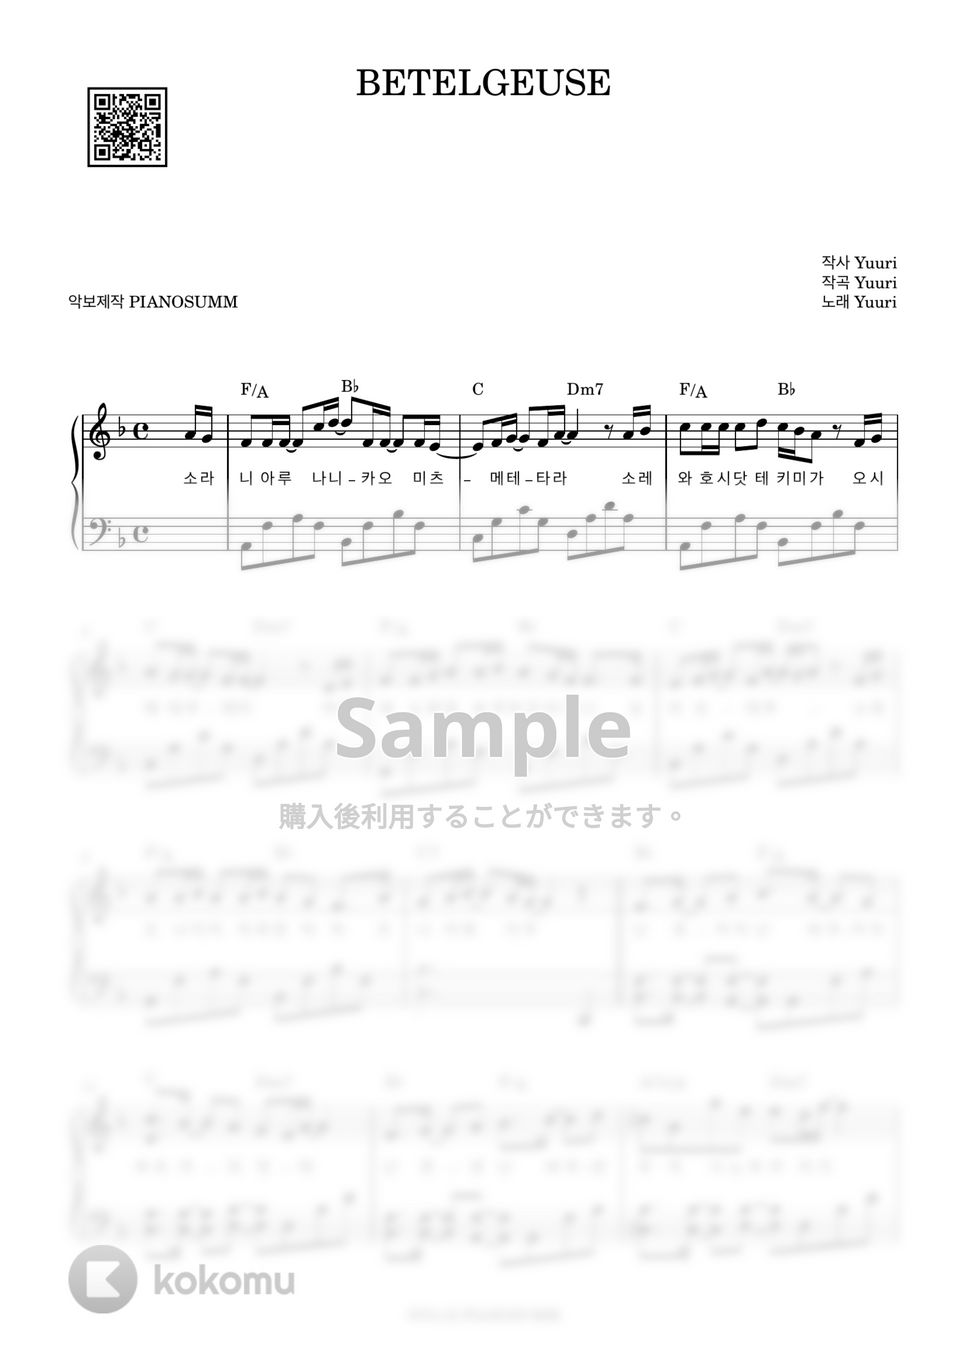 Yuuri - ベテルギウス (BETELGEUSE) by PIANOSUMM